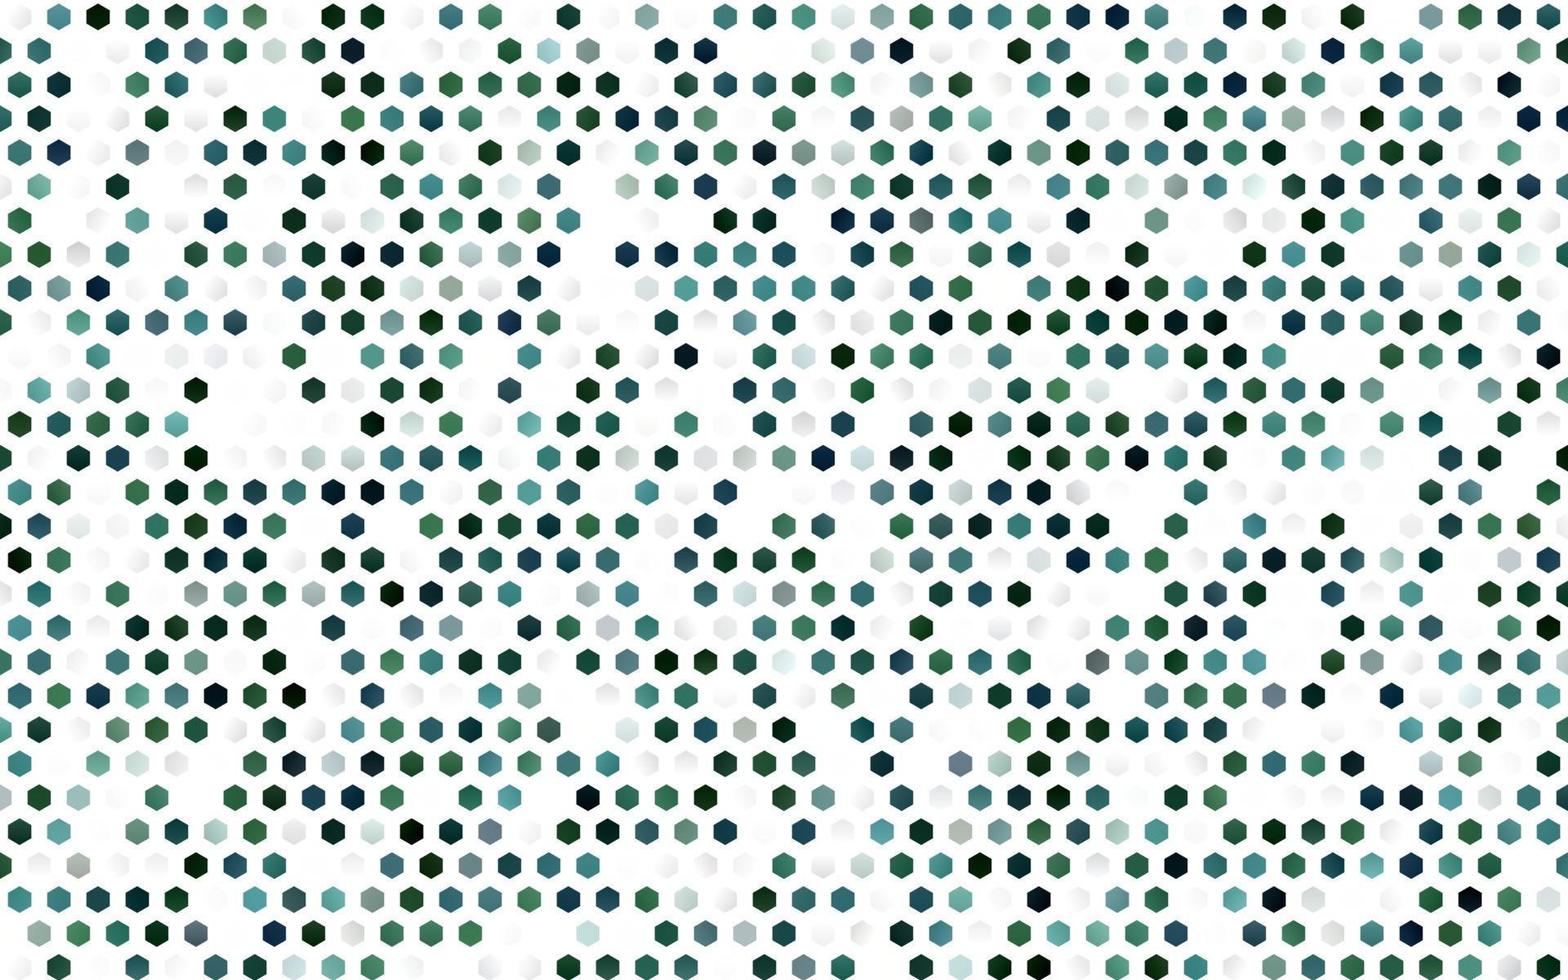 textura de vector verde oscuro con hexágonos de colores.